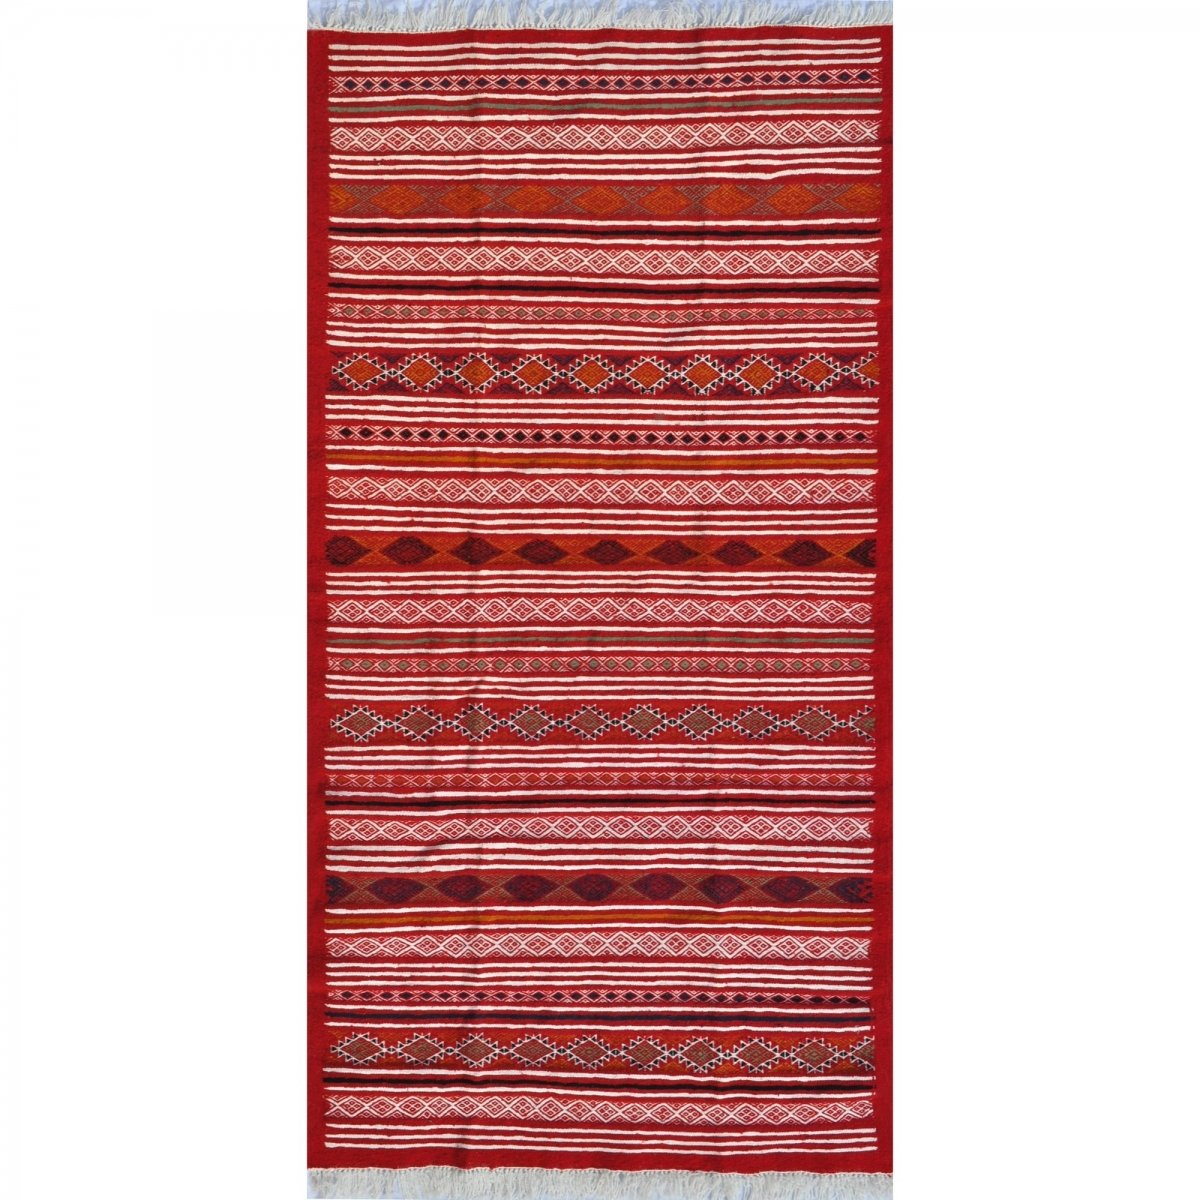 Berber tapijt Tapijt Kilim Driba 110x210 Rood/Oranje (Handgeweven, Wol, Tunesië) Tunesisch kilimdeken, Marokkaanse stijl. Rechth